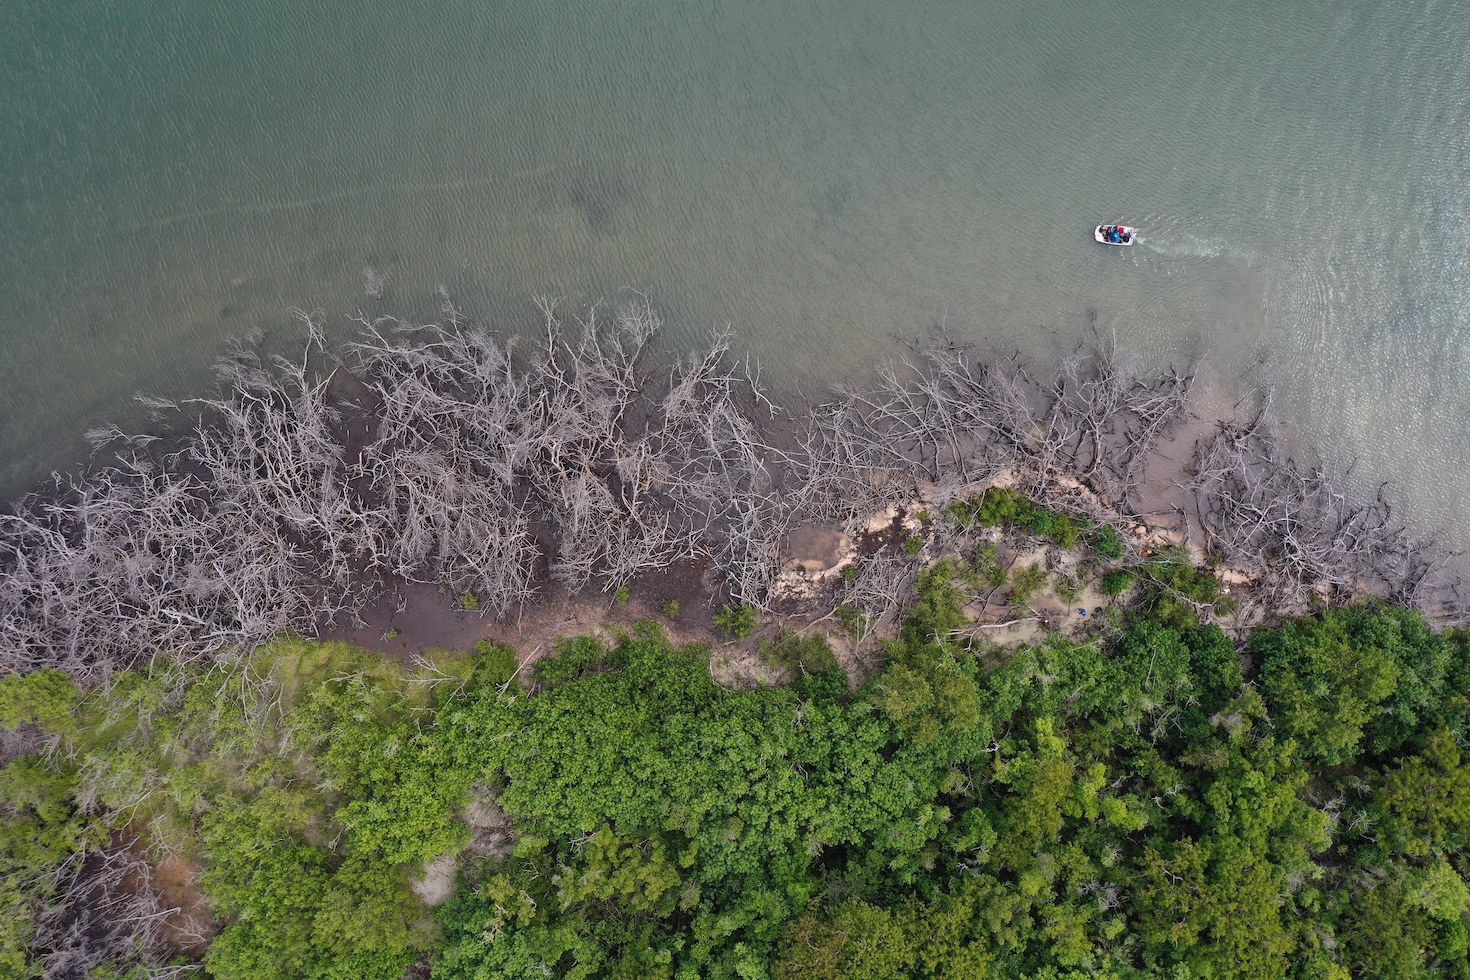 Coastline with mangroves